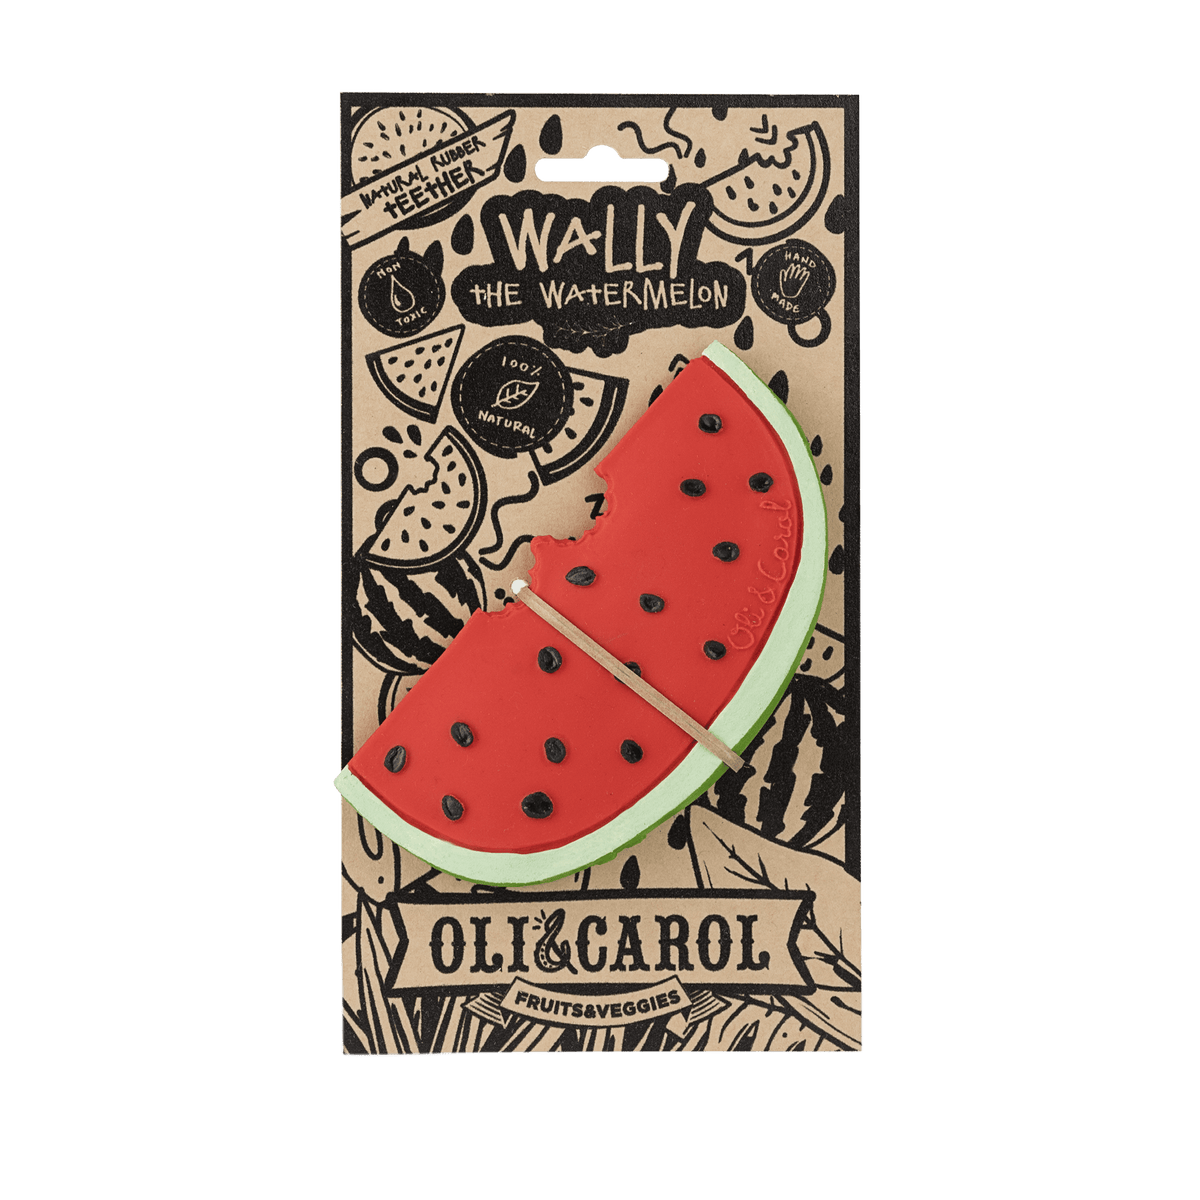 Oli & Carol | Jouet de caoutchouc 100% naturel | Fruits & Veggies | Wally the Watermelon - Oli & Carol